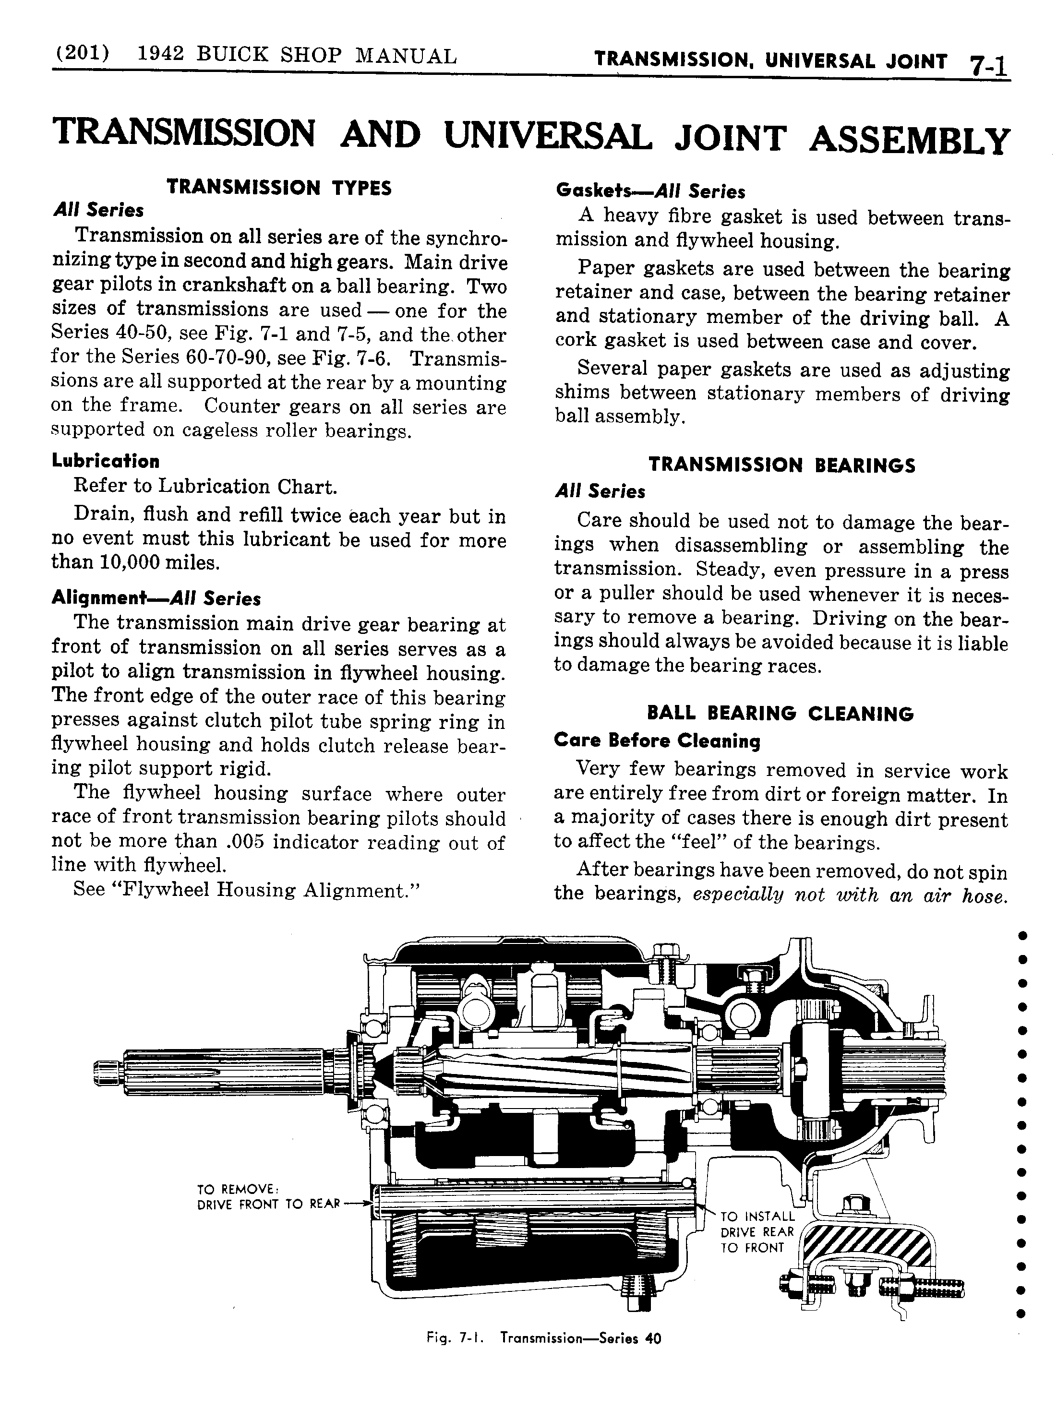 n_08 1942 Buick Shop Manual - Transmission-001-001.jpg